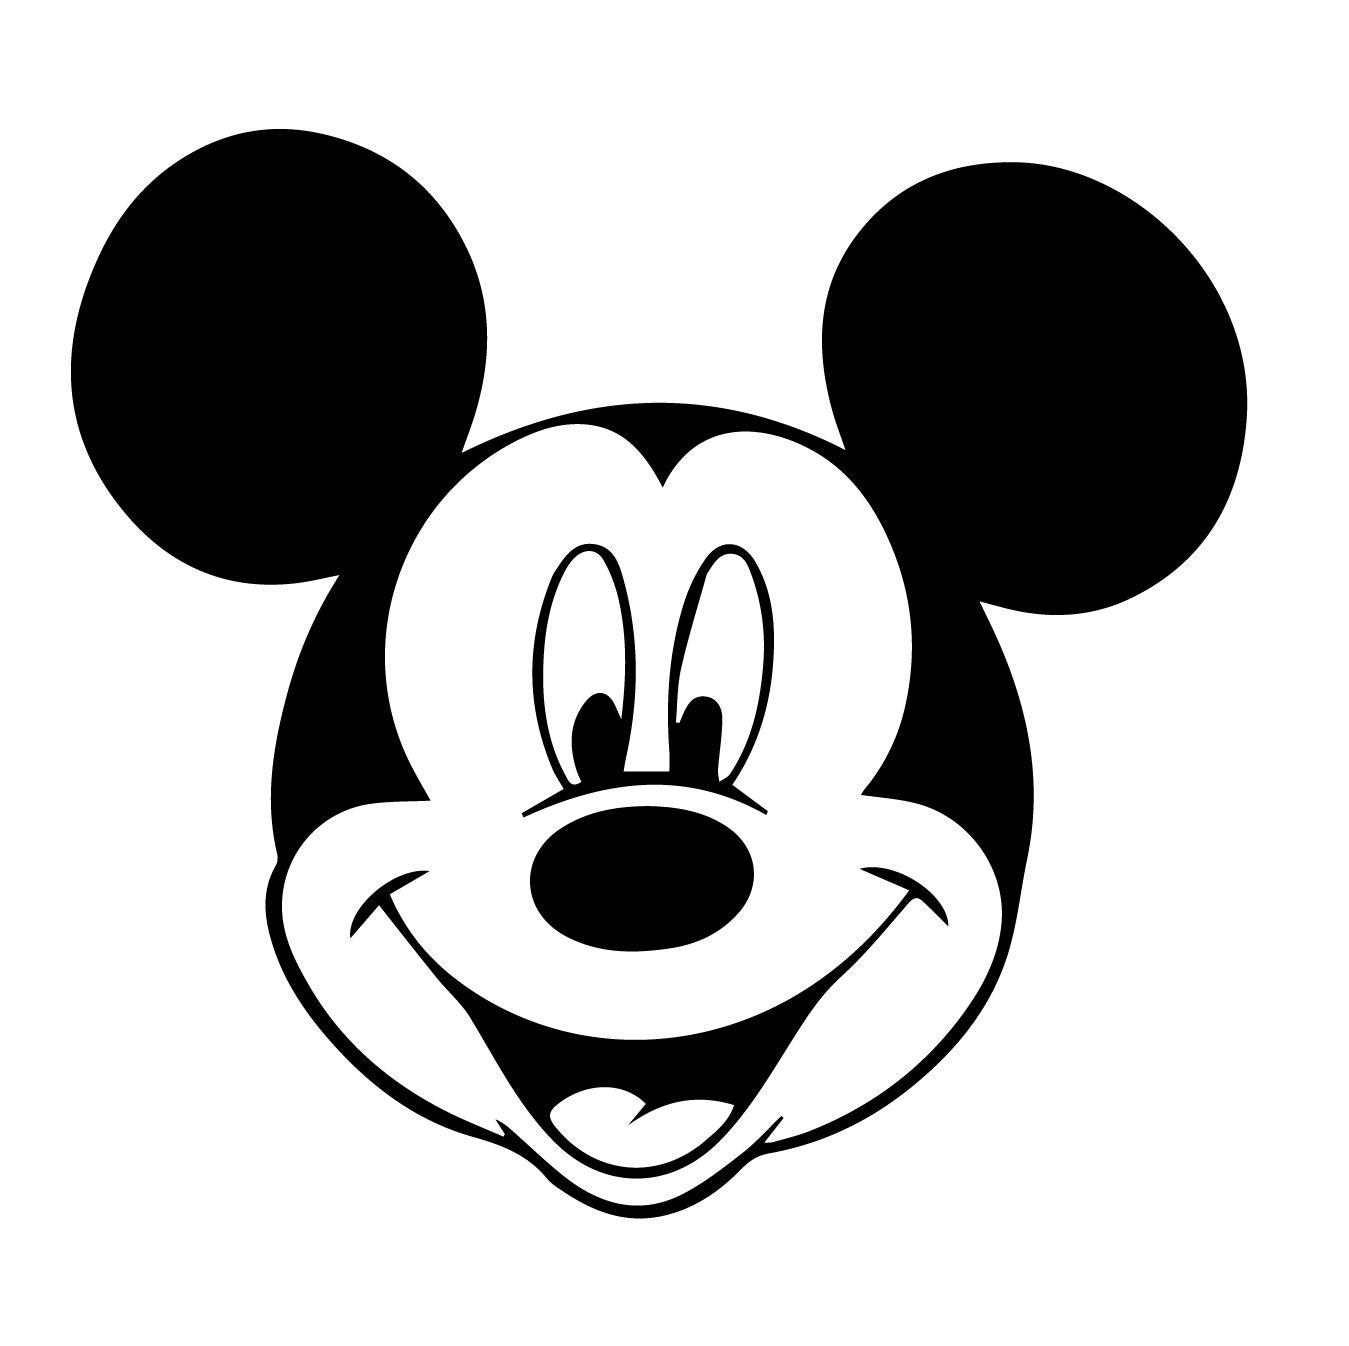 Mickey mouse svgWalt disney eps Mickey mouse